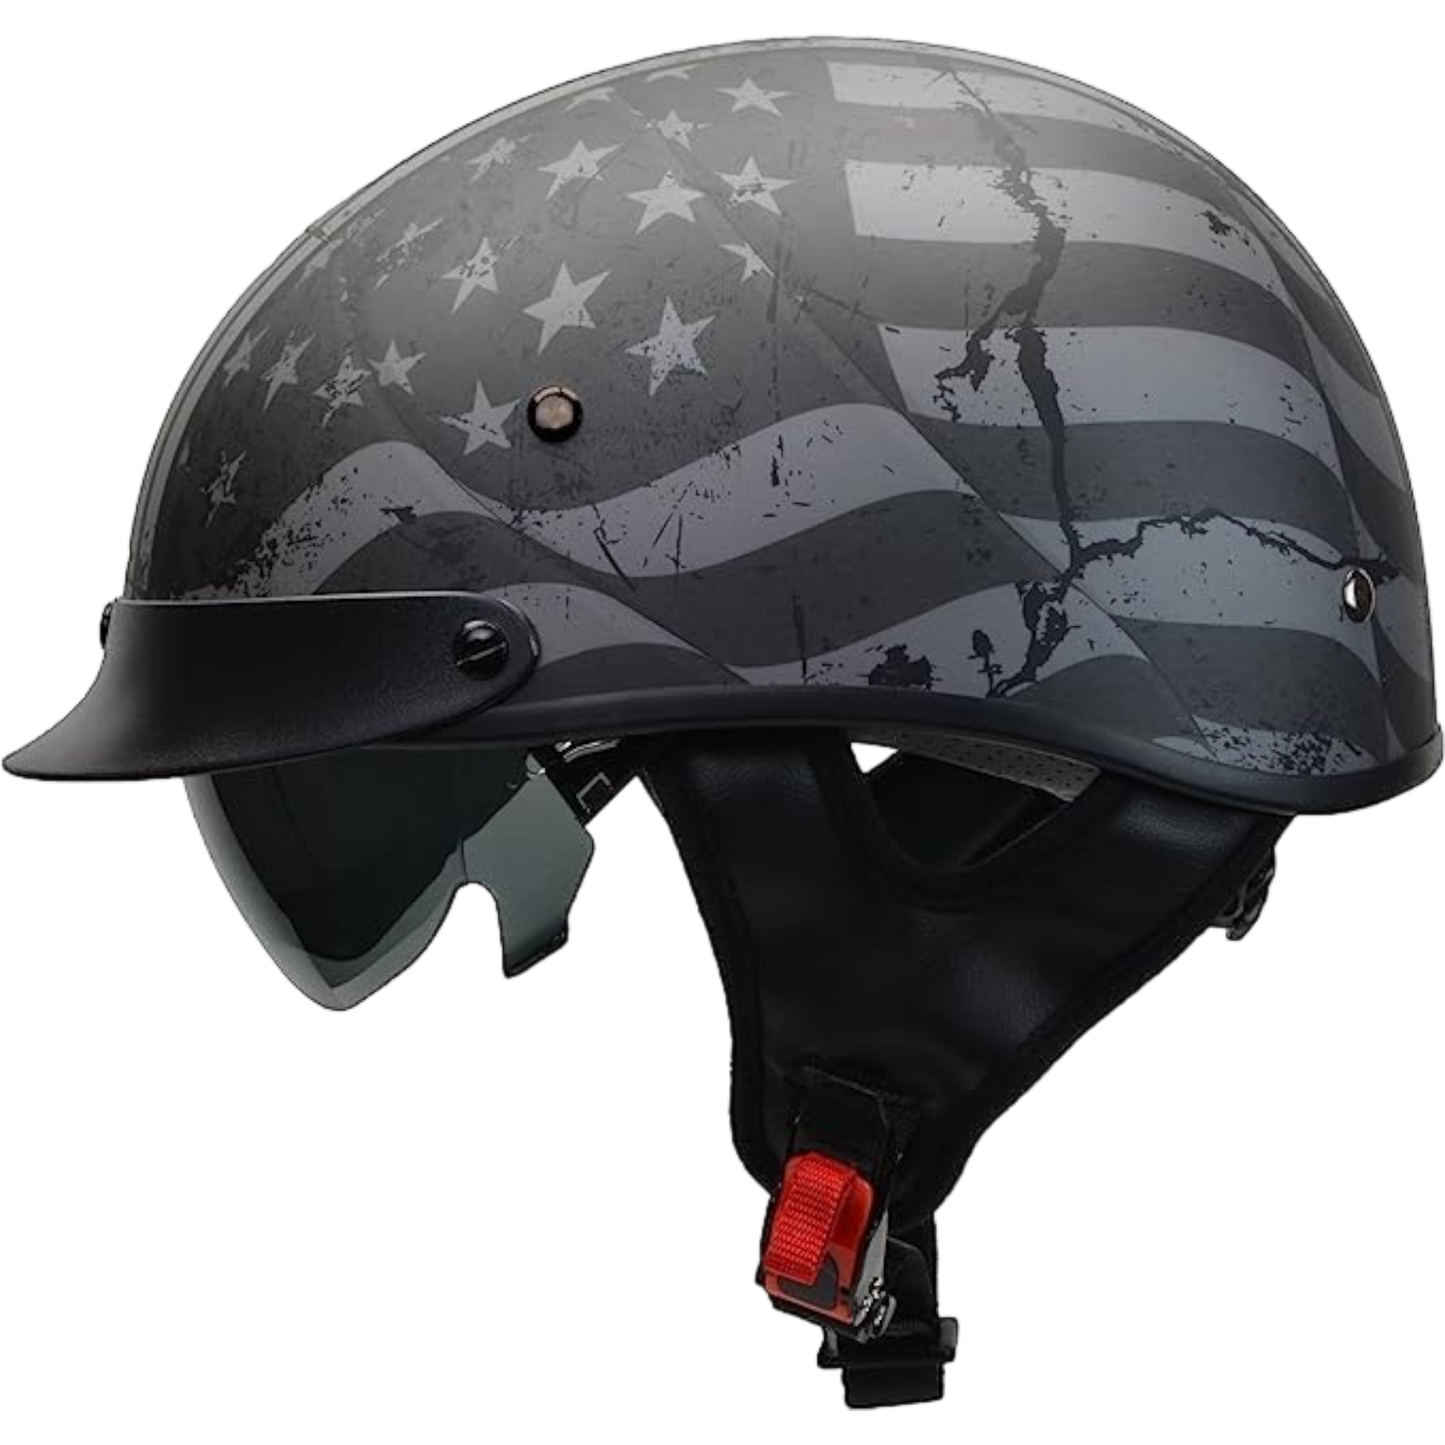 Vega Warrior Motorcycle Half Helmet with dropdown shield and sunvisor - Patriotic Flag